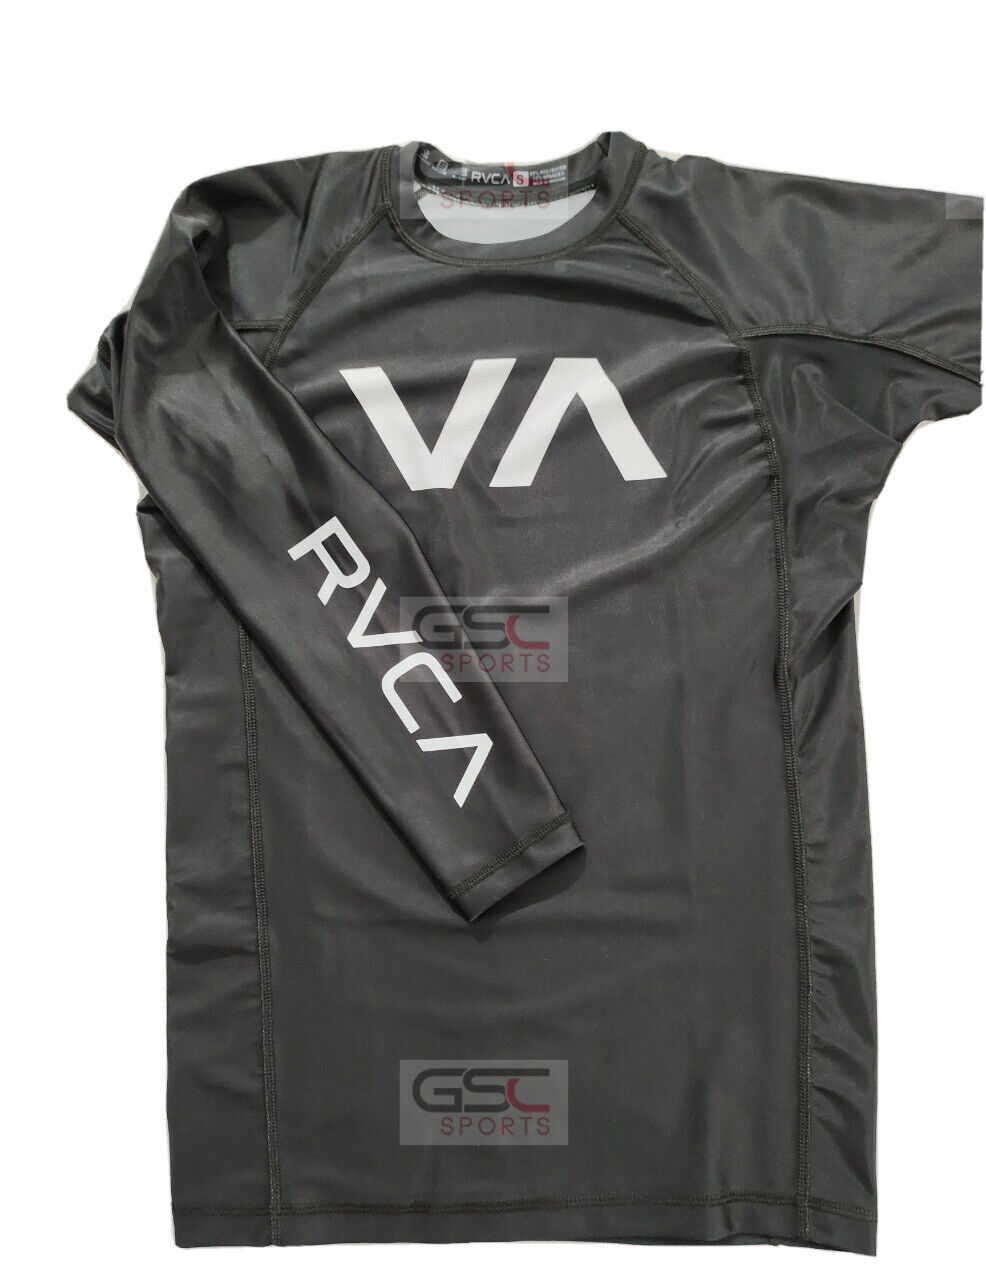 RVCA VA Rush Guard Bjj Compression Shirt XL Size With Tag Card Brand New Shoyoroll batch 60